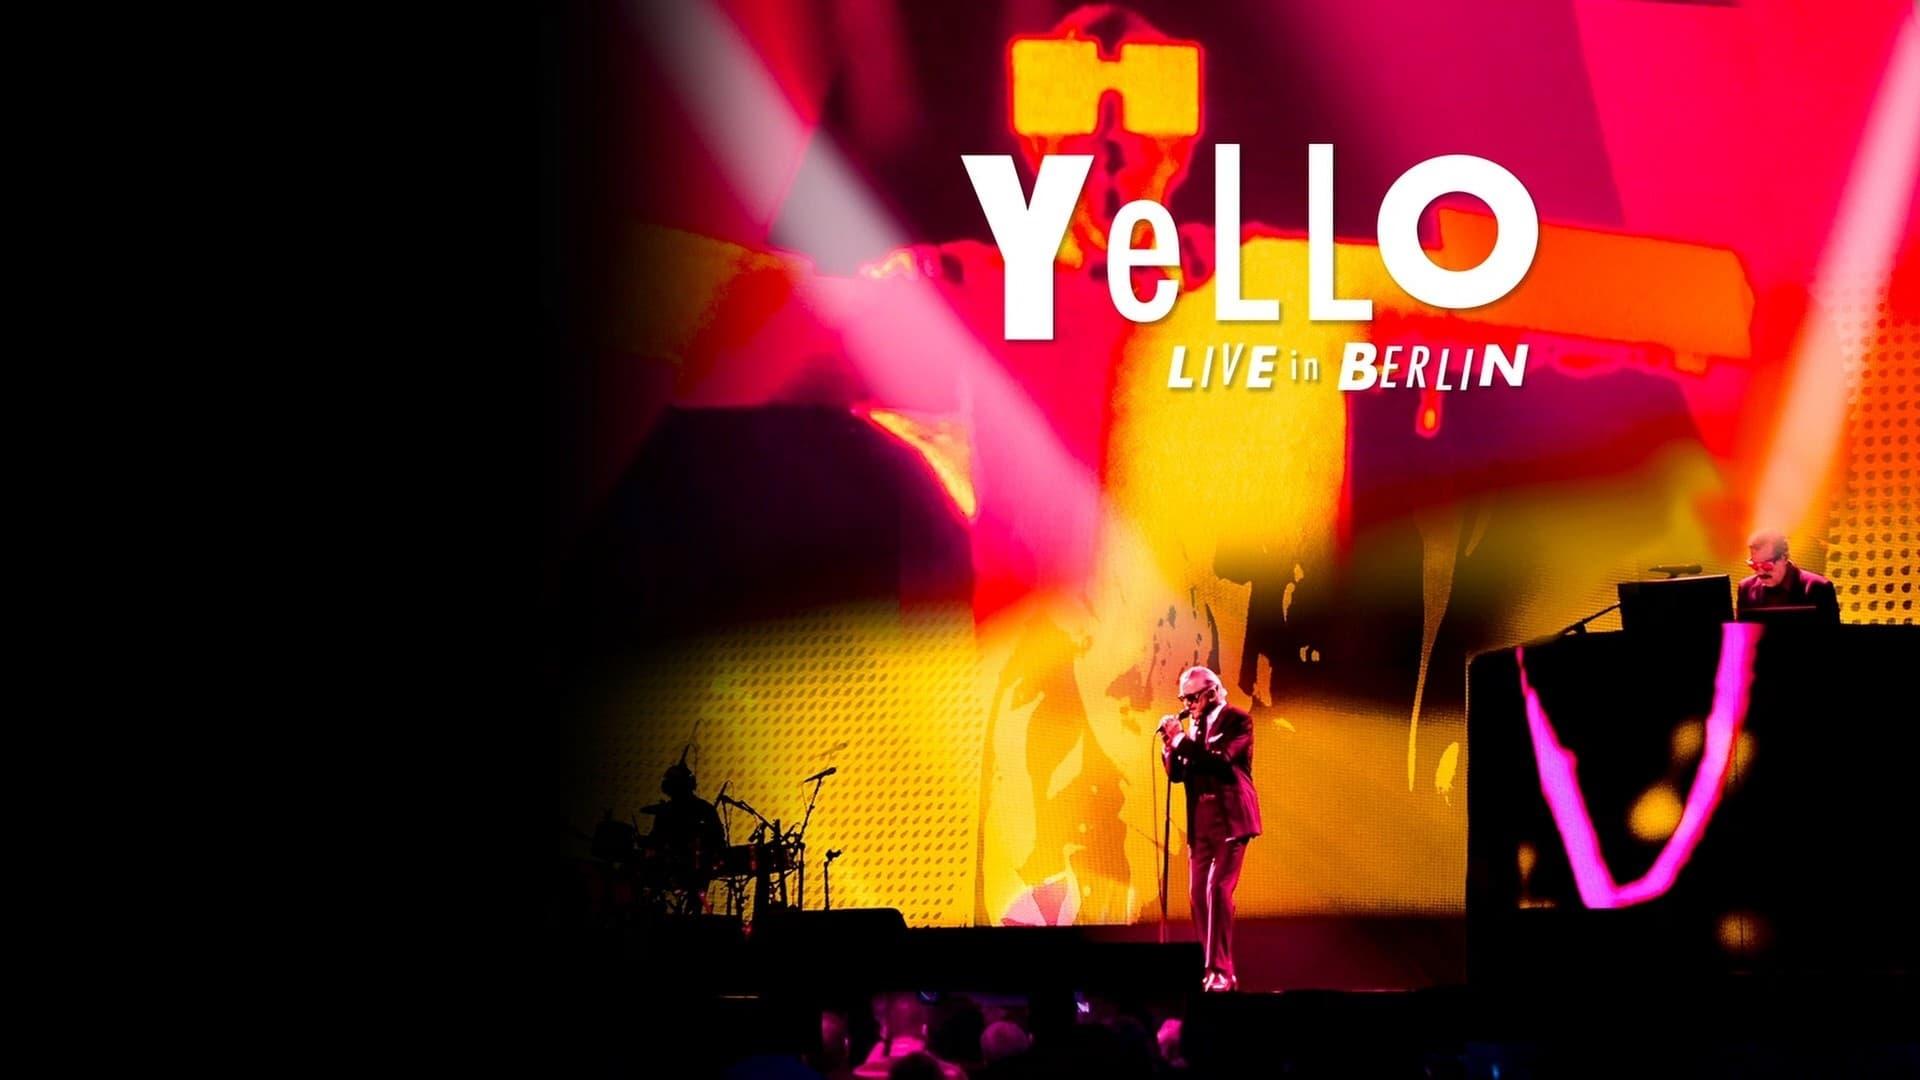 Yello - Live in Berlin backdrop